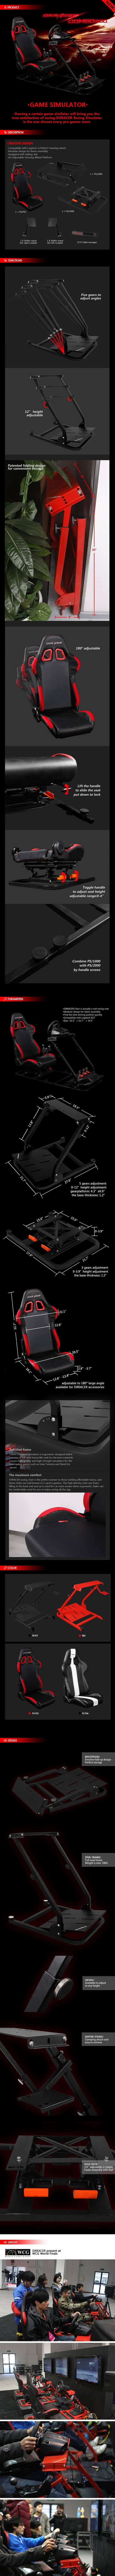 DXRacer Racing Simulator